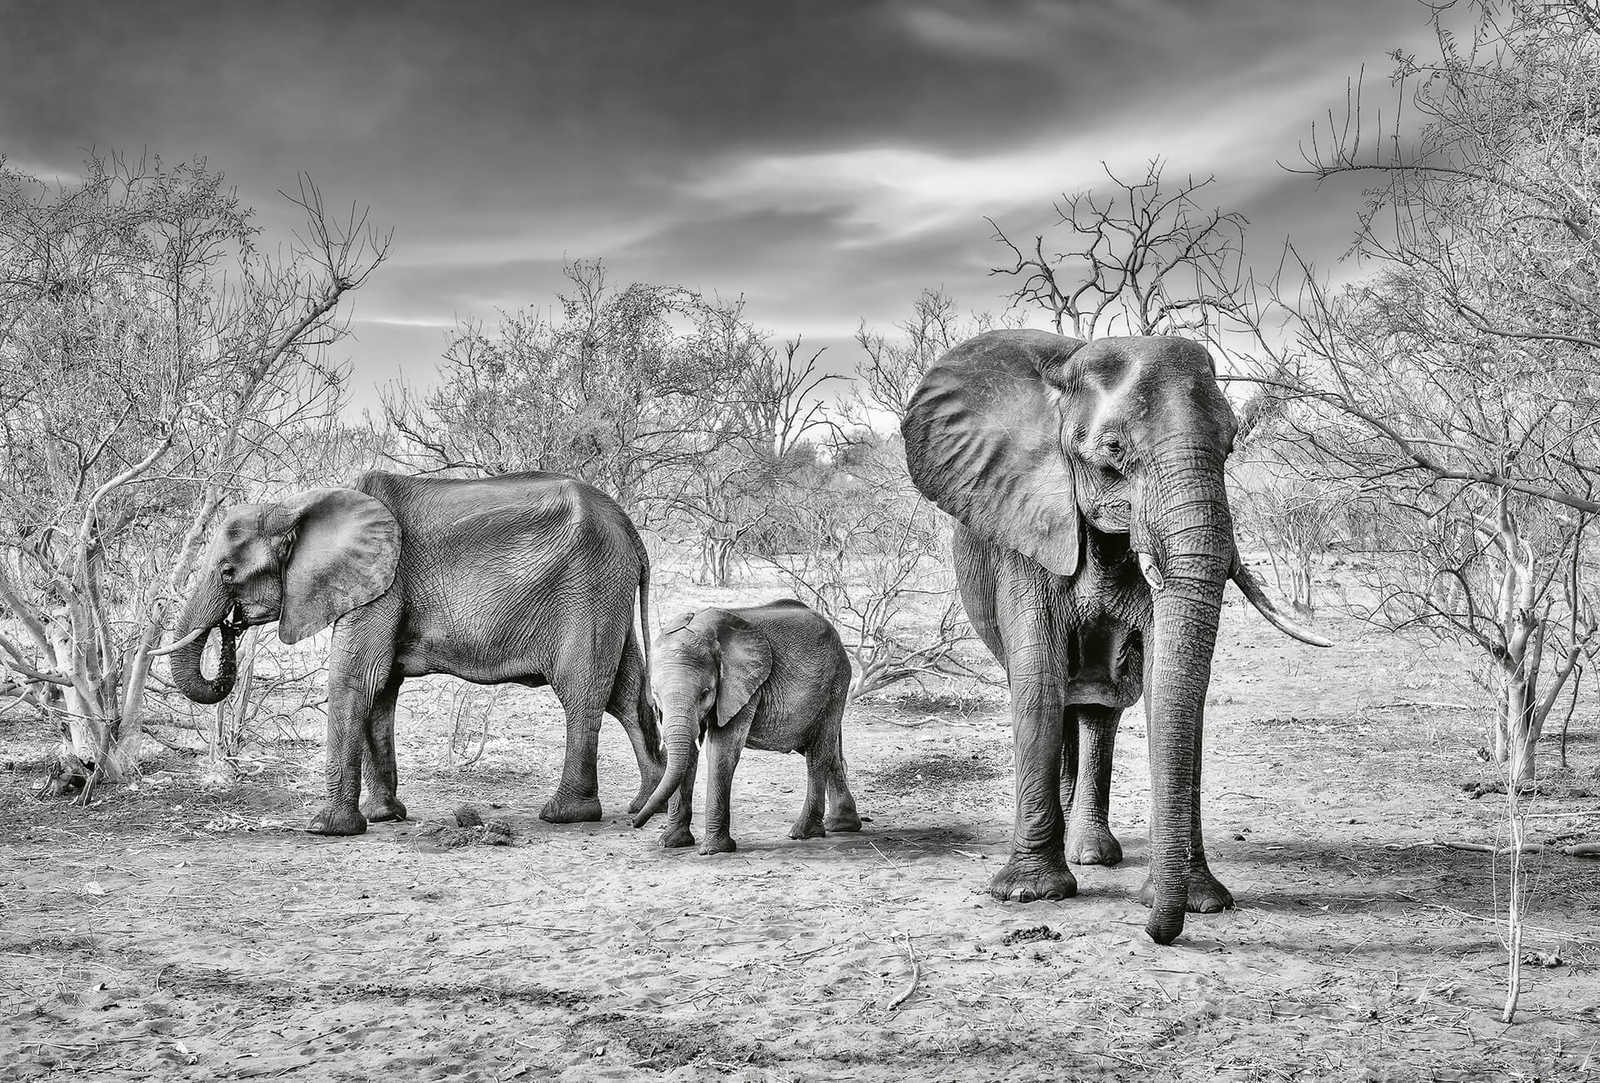         Fototapete Elefanten Familie – Grau, Weiß, Schwarz
    